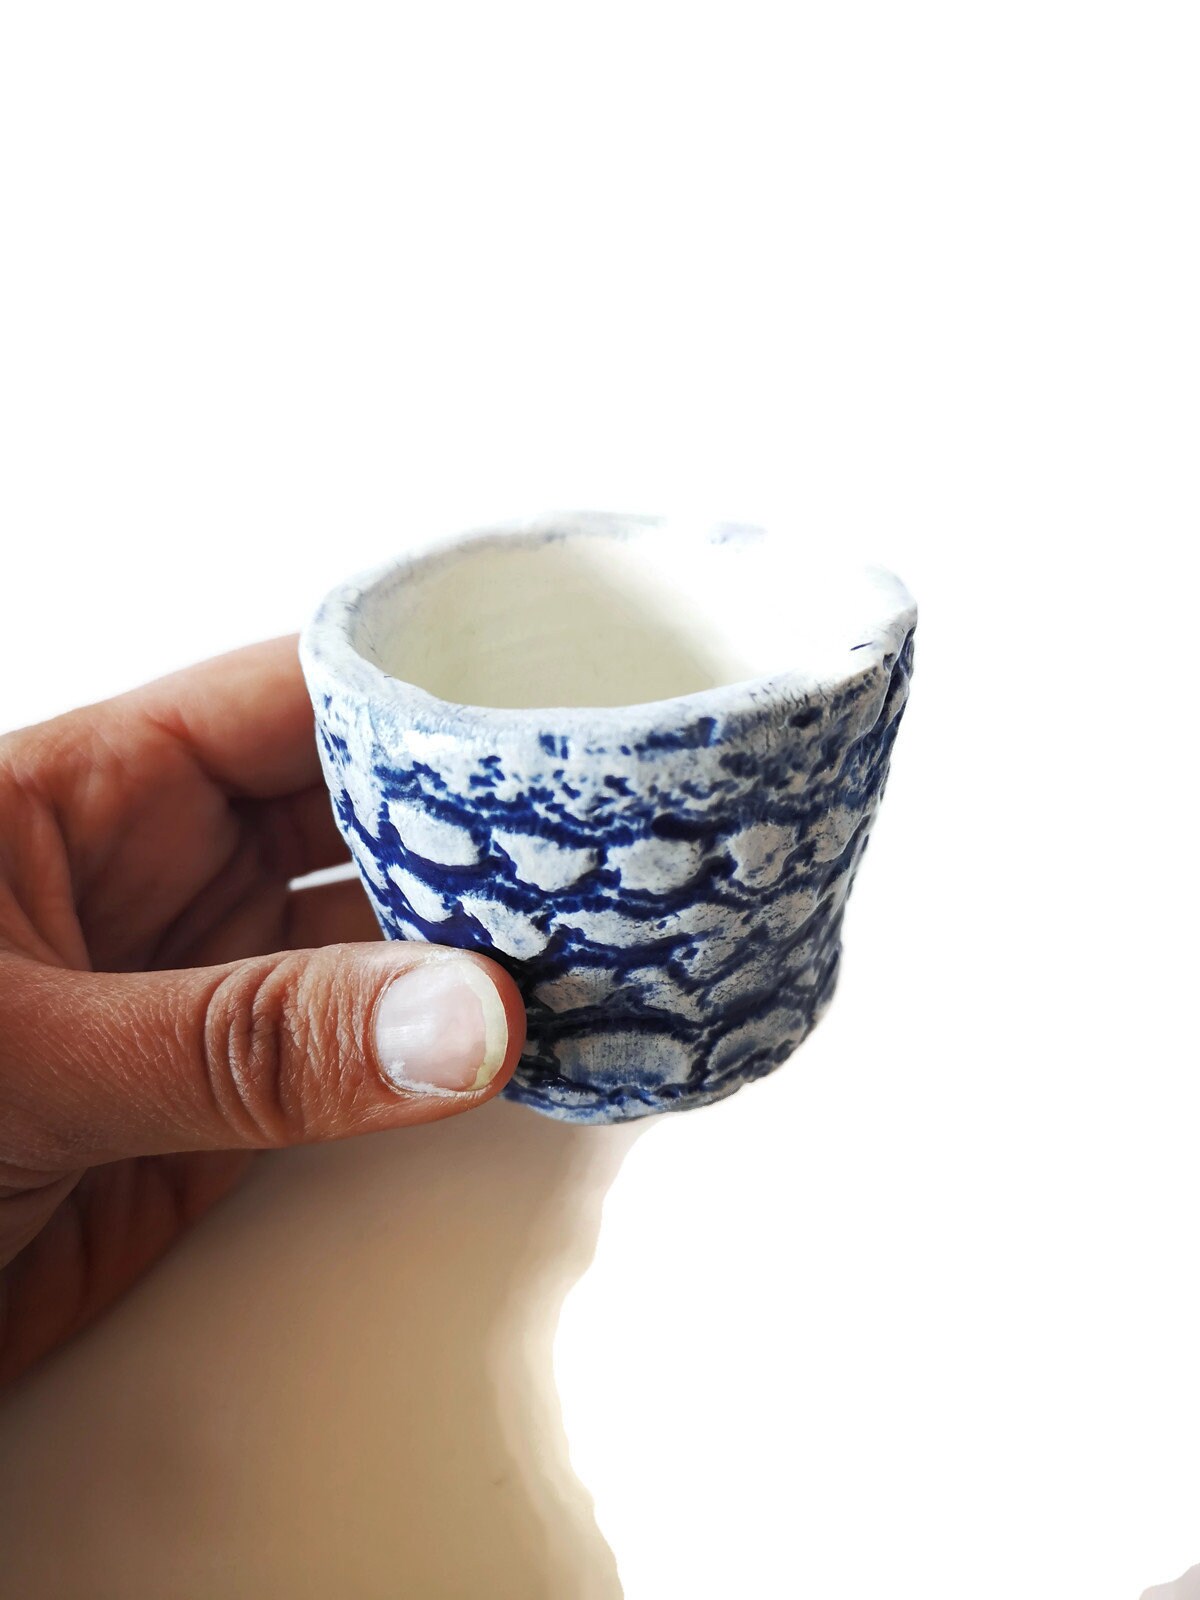 Pottery Espresso Cup, Stoneware Mug, Ceramic Espresso Cup, Reusable Coffee Cup, Ceramic Keep Cup, Novelty Pottery Coffee Mug Handmade Gift - Ceramica Ana Rafael